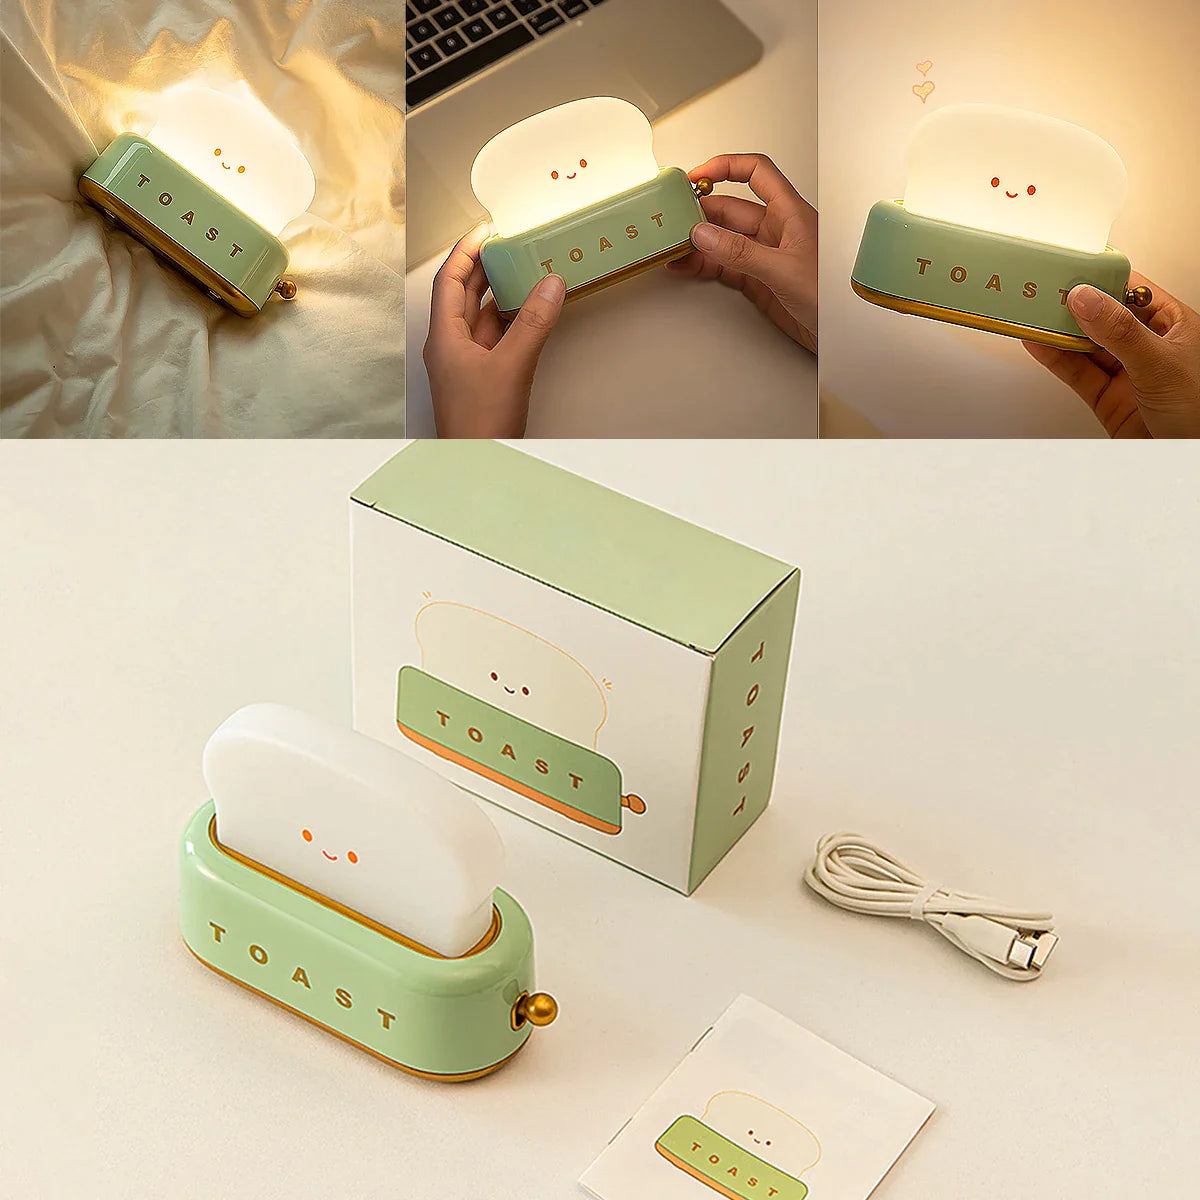 Bread Maker Night Light USB Charging Dimming Bedside Table Night Light Timer Night Sleep Lamp